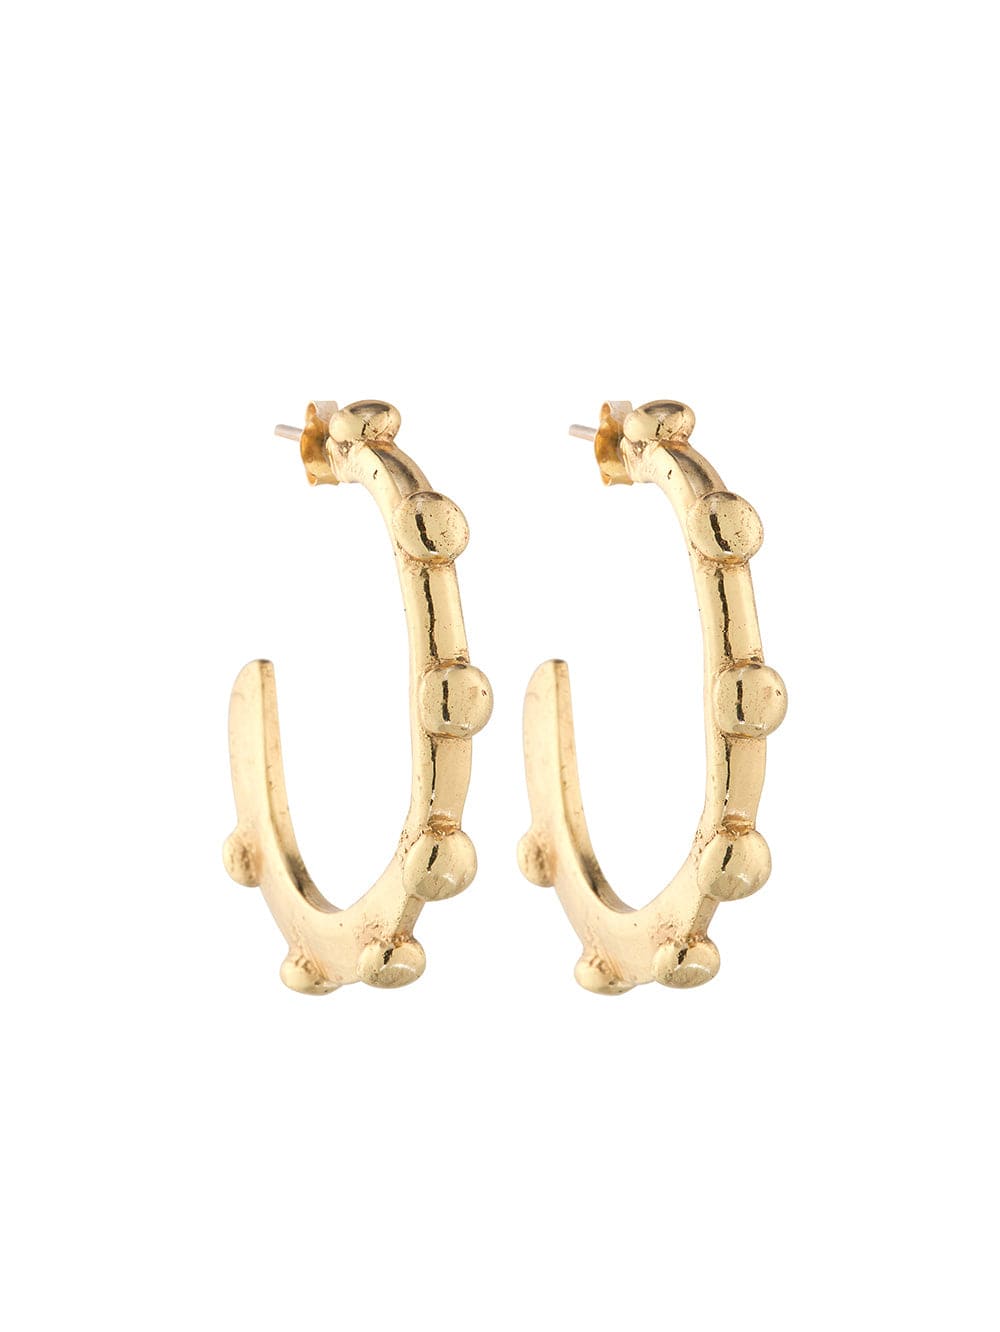 Solita Earrings Large KIVARI | Gold hoops with droplets